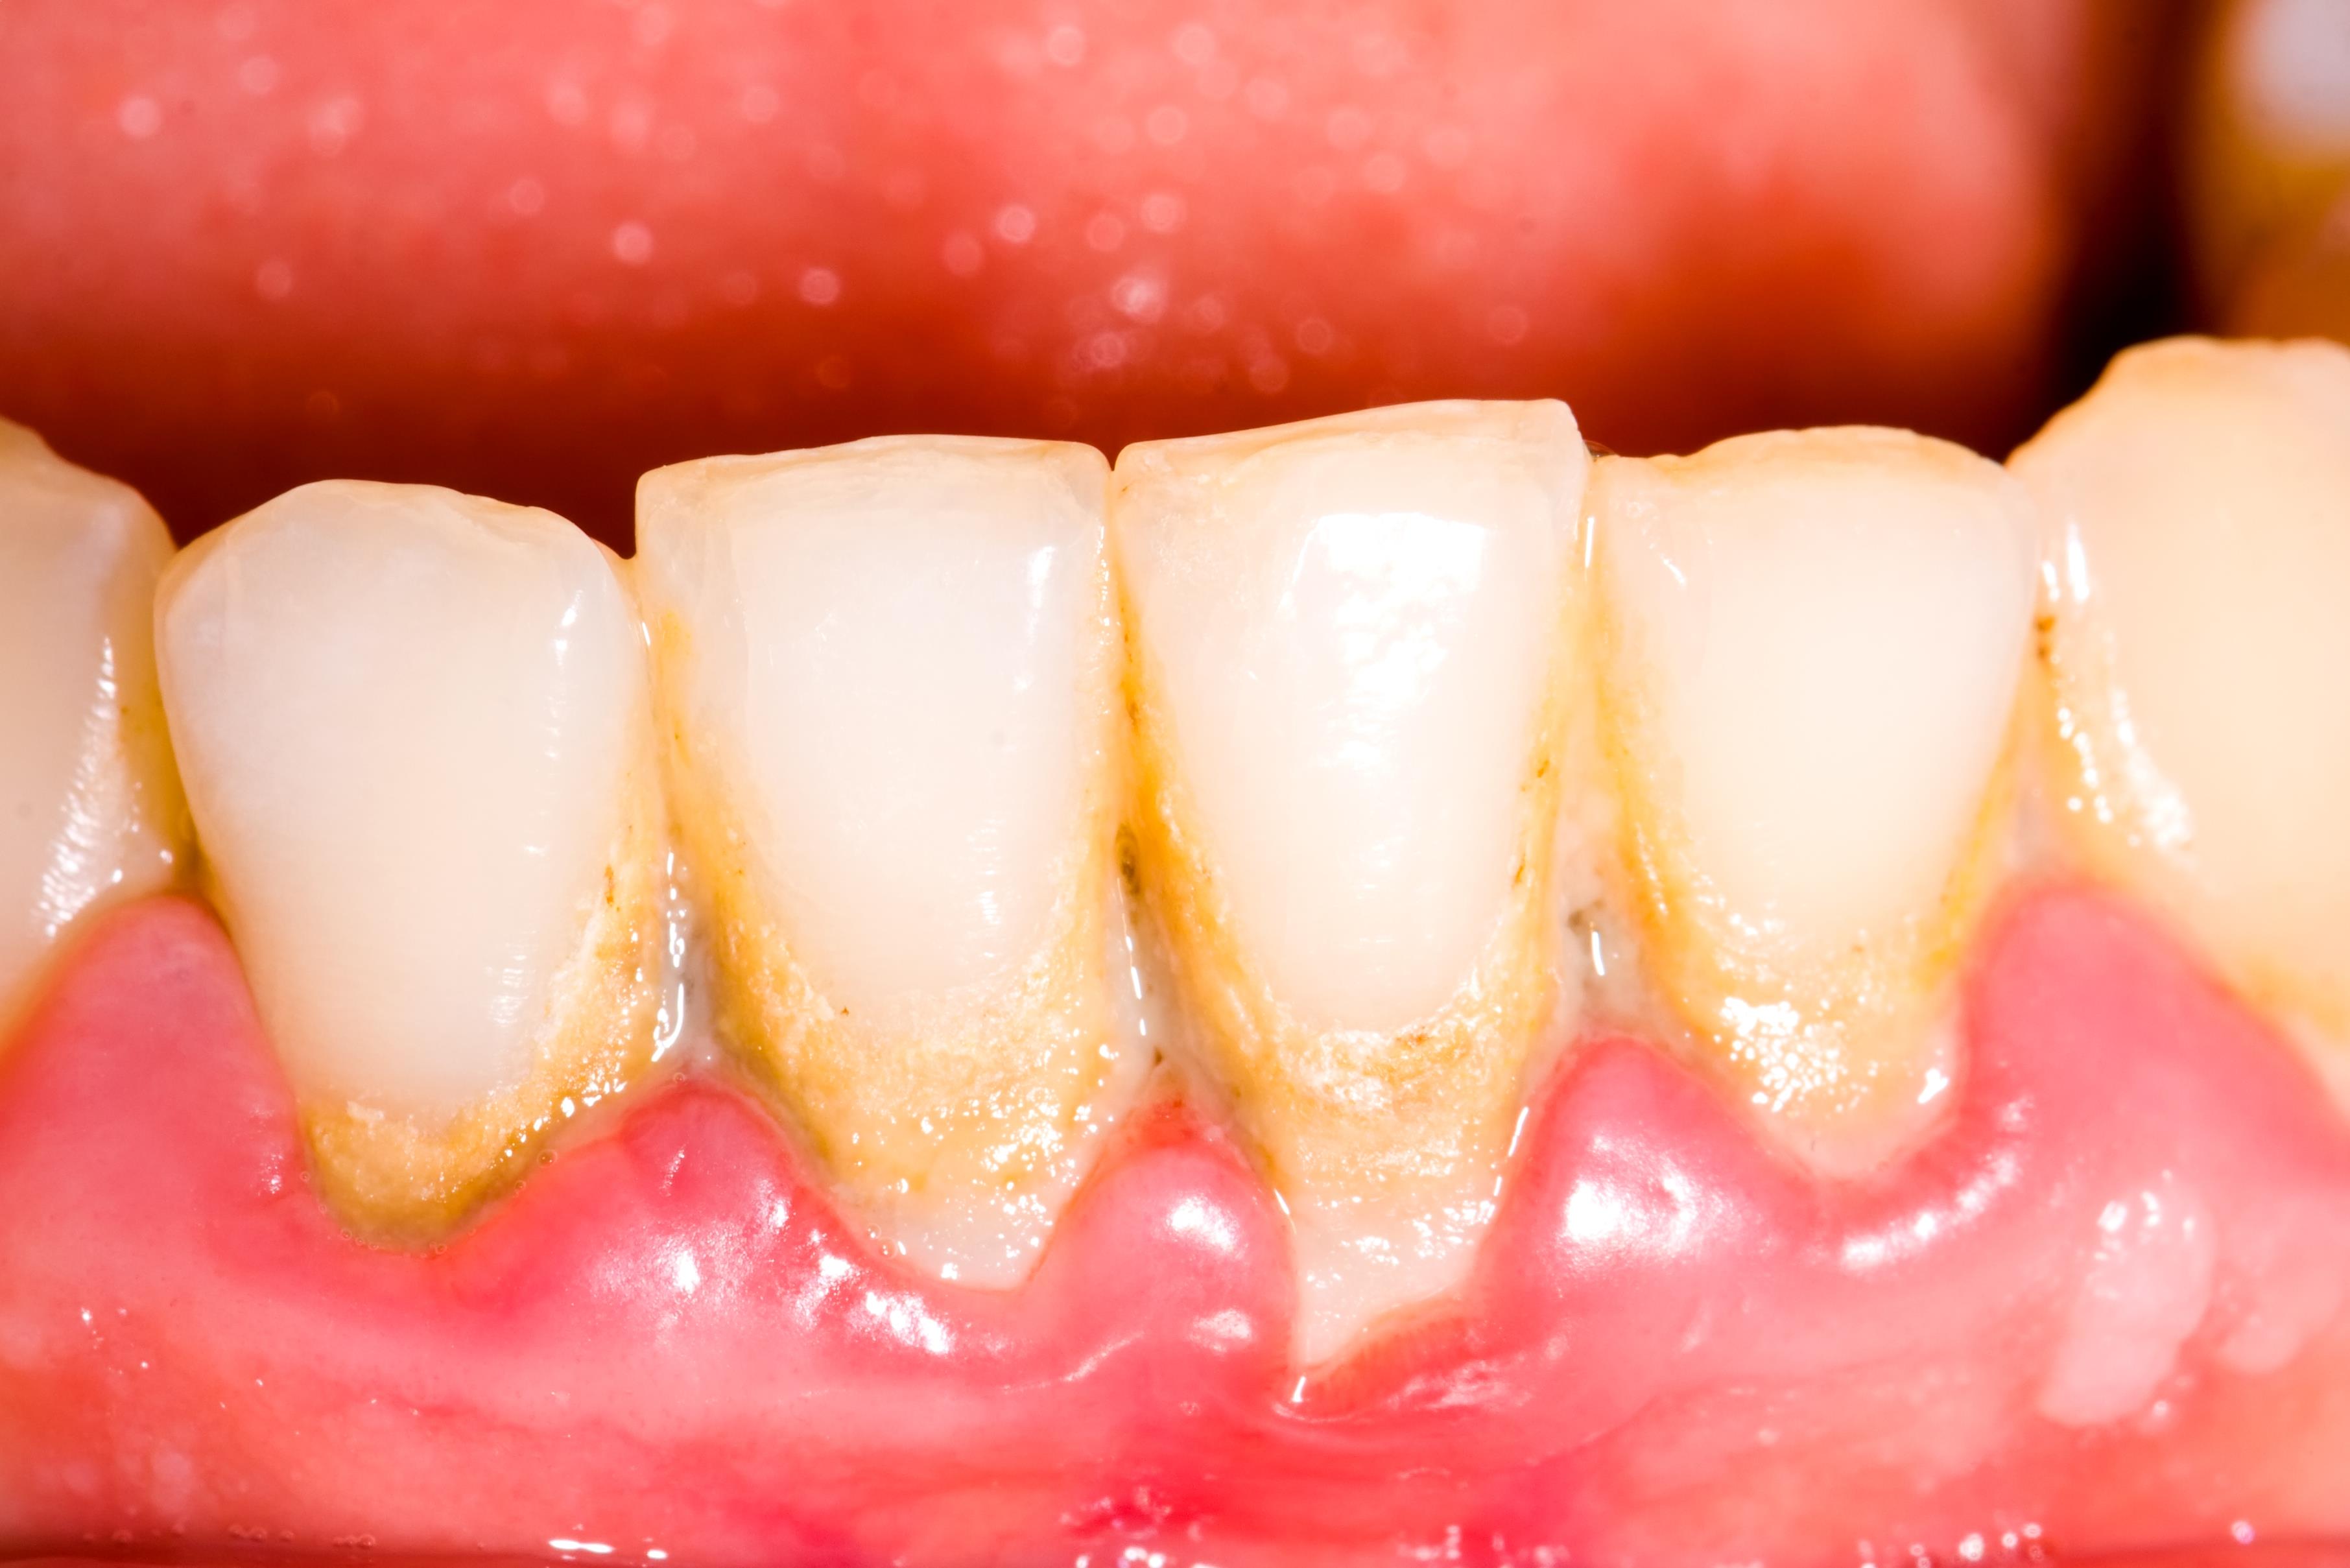 plaque teeth